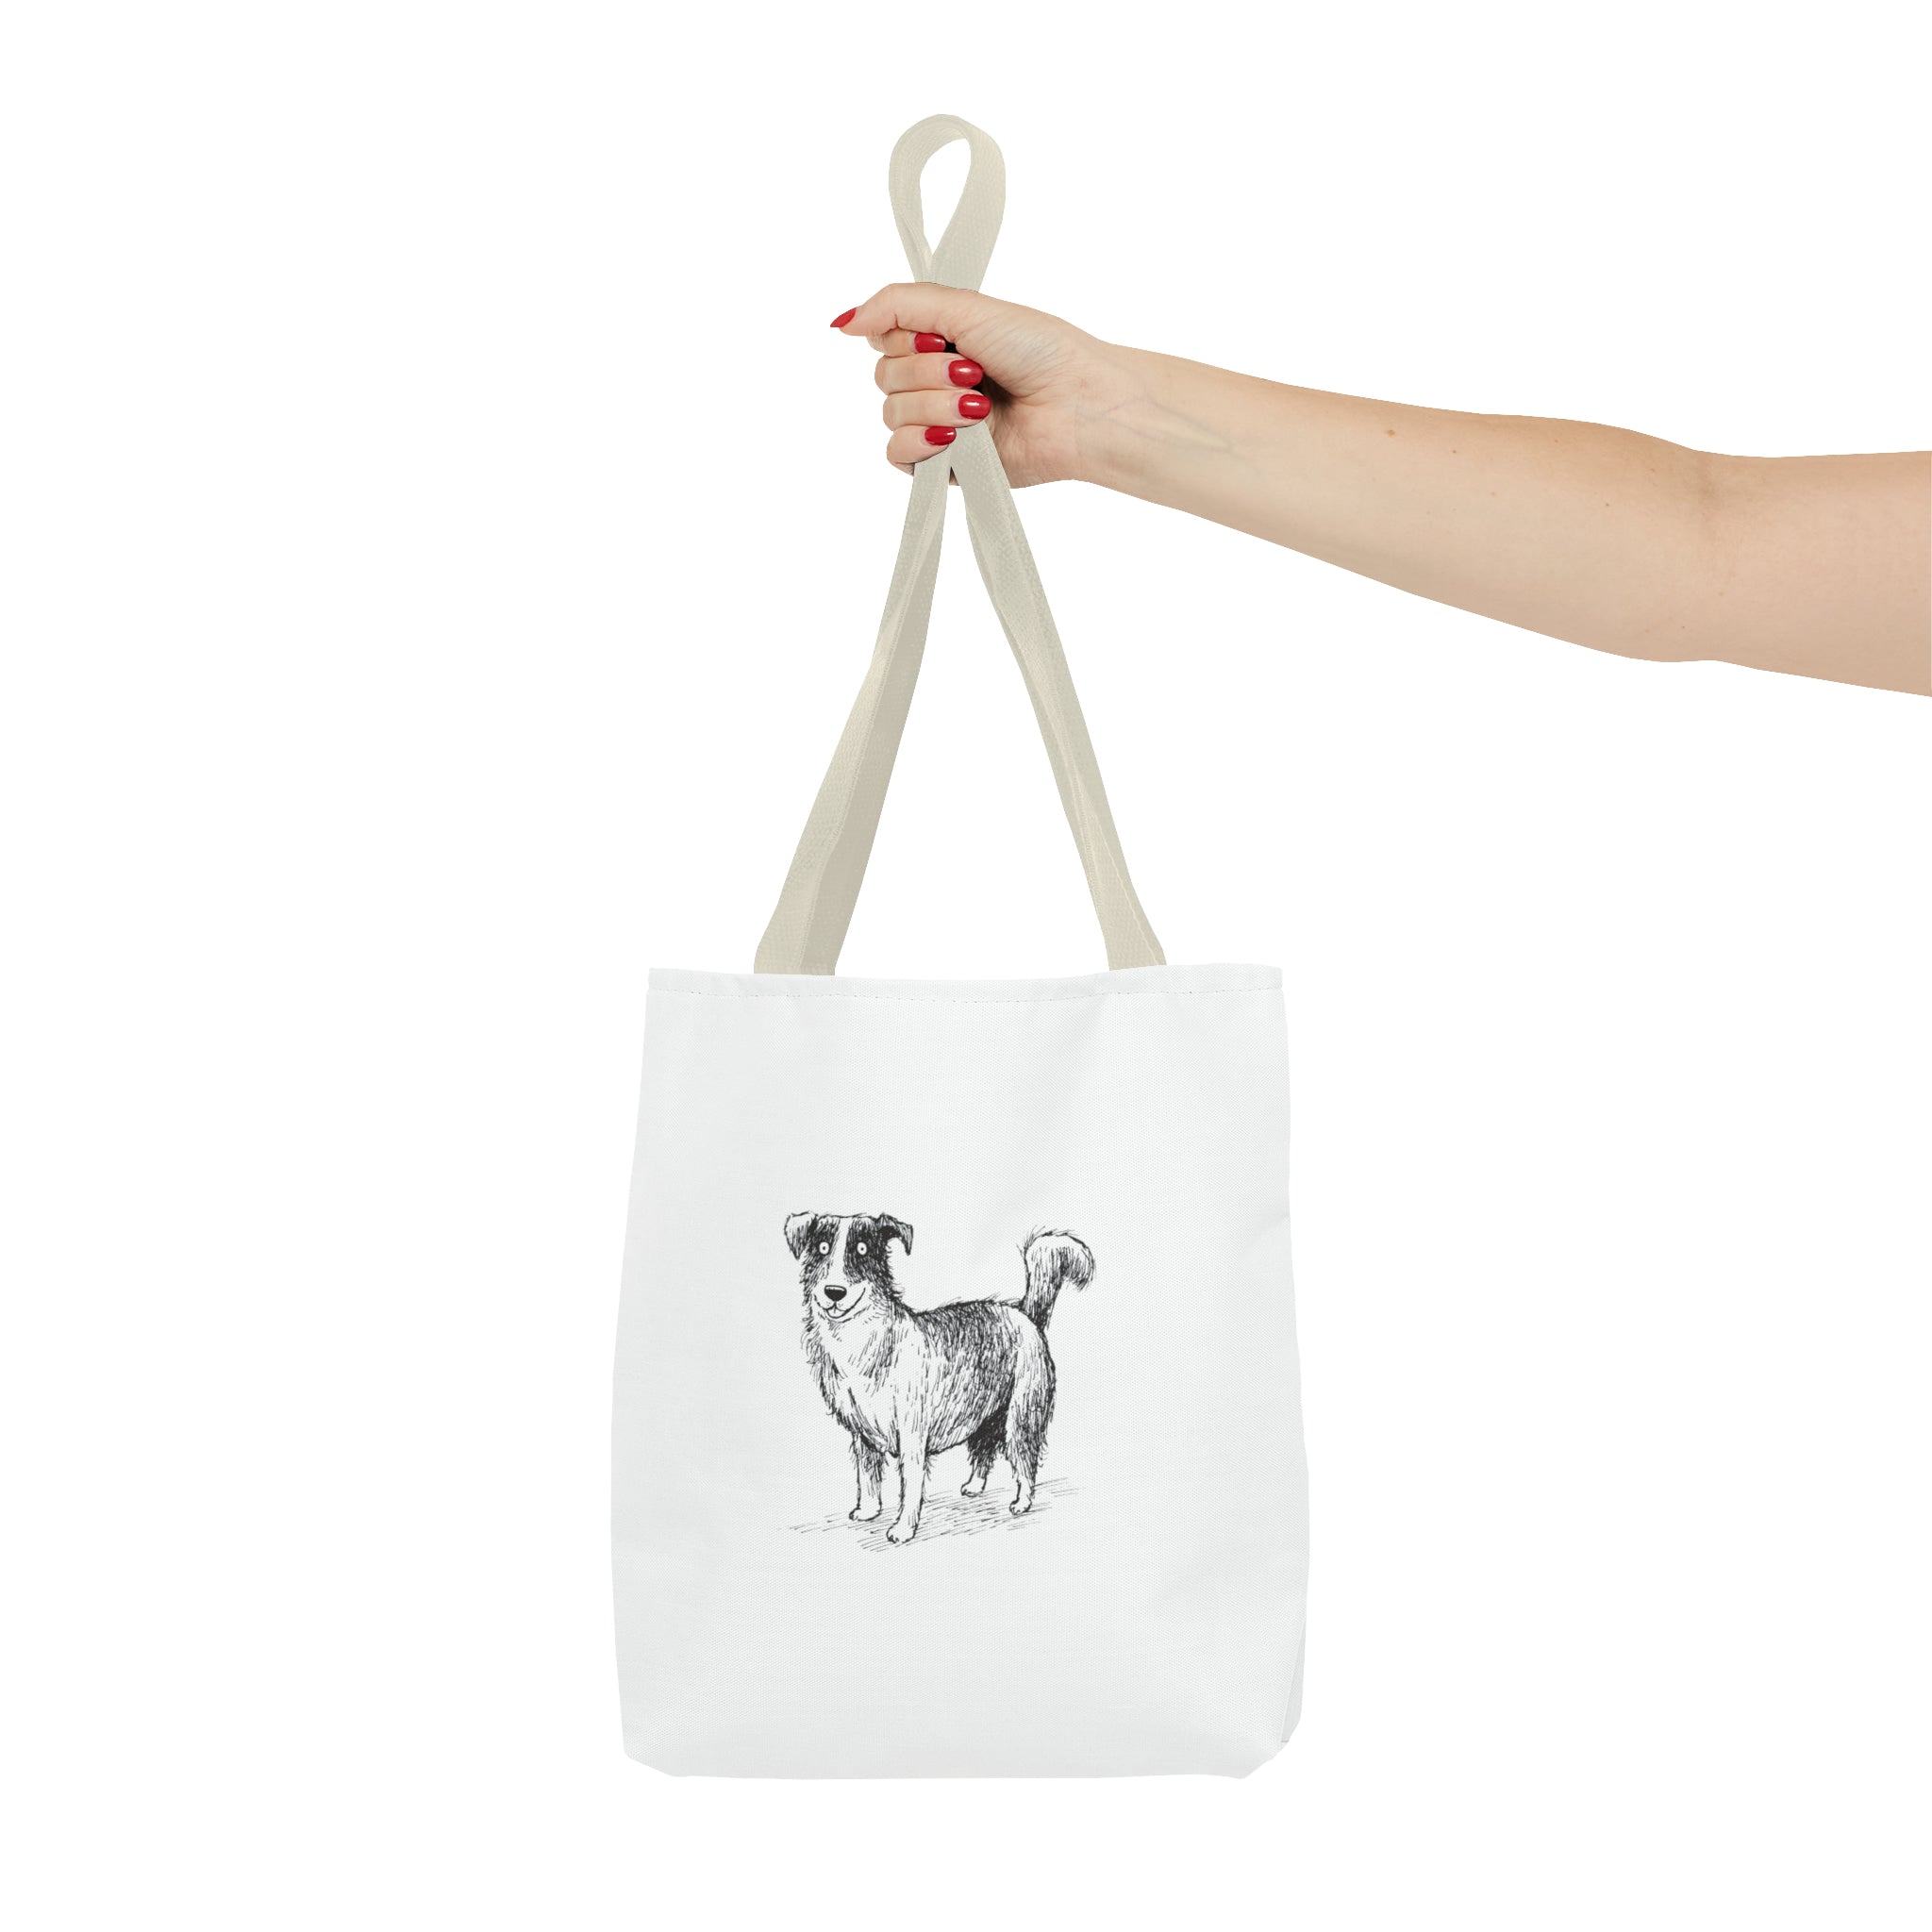 Australian Shepherd - Tote Bag